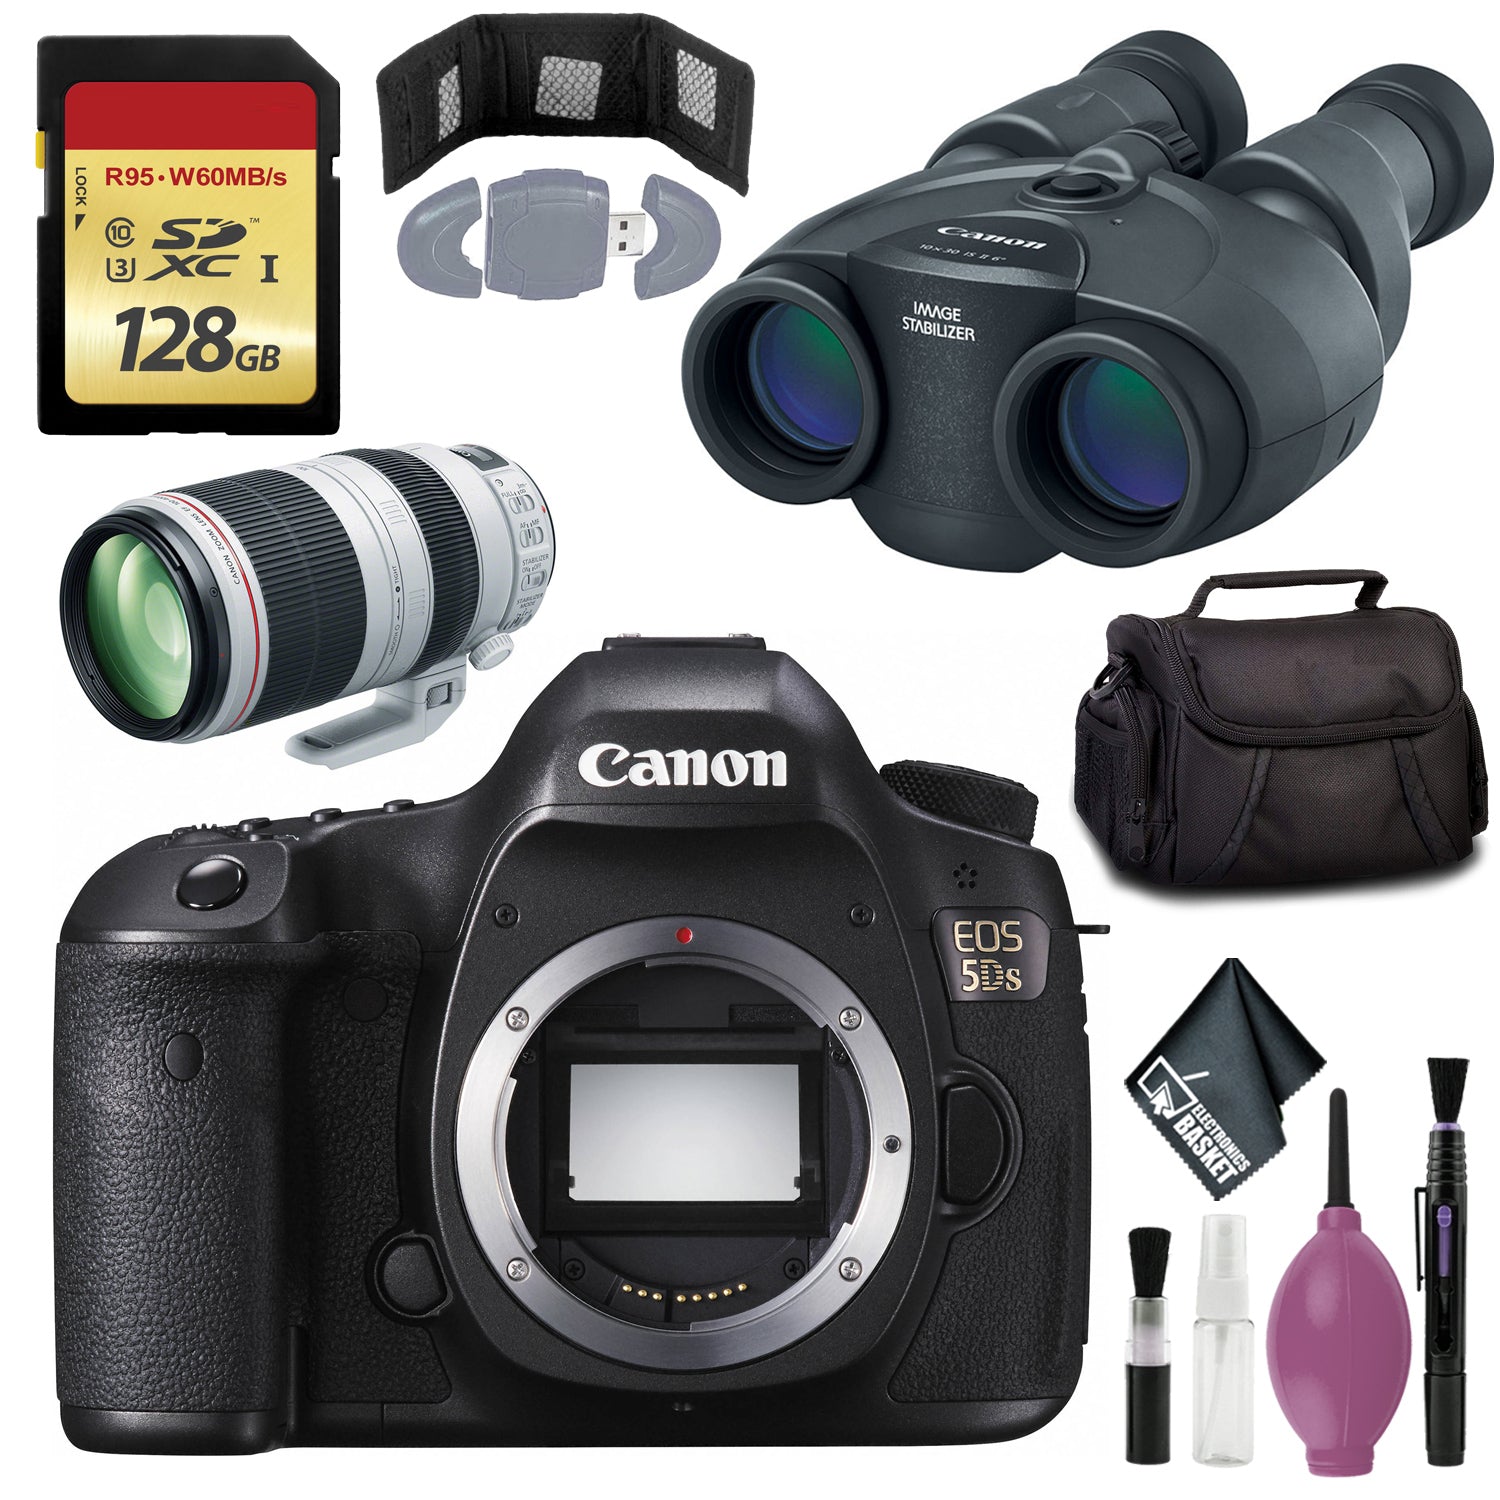 Canon 10x30 IS II Image Stabilized Binocular - Canon????EOS 5DS DSLR Camera - 128GB Card - EF 100-400MM F/4.5-5.6L IS II USM LENS